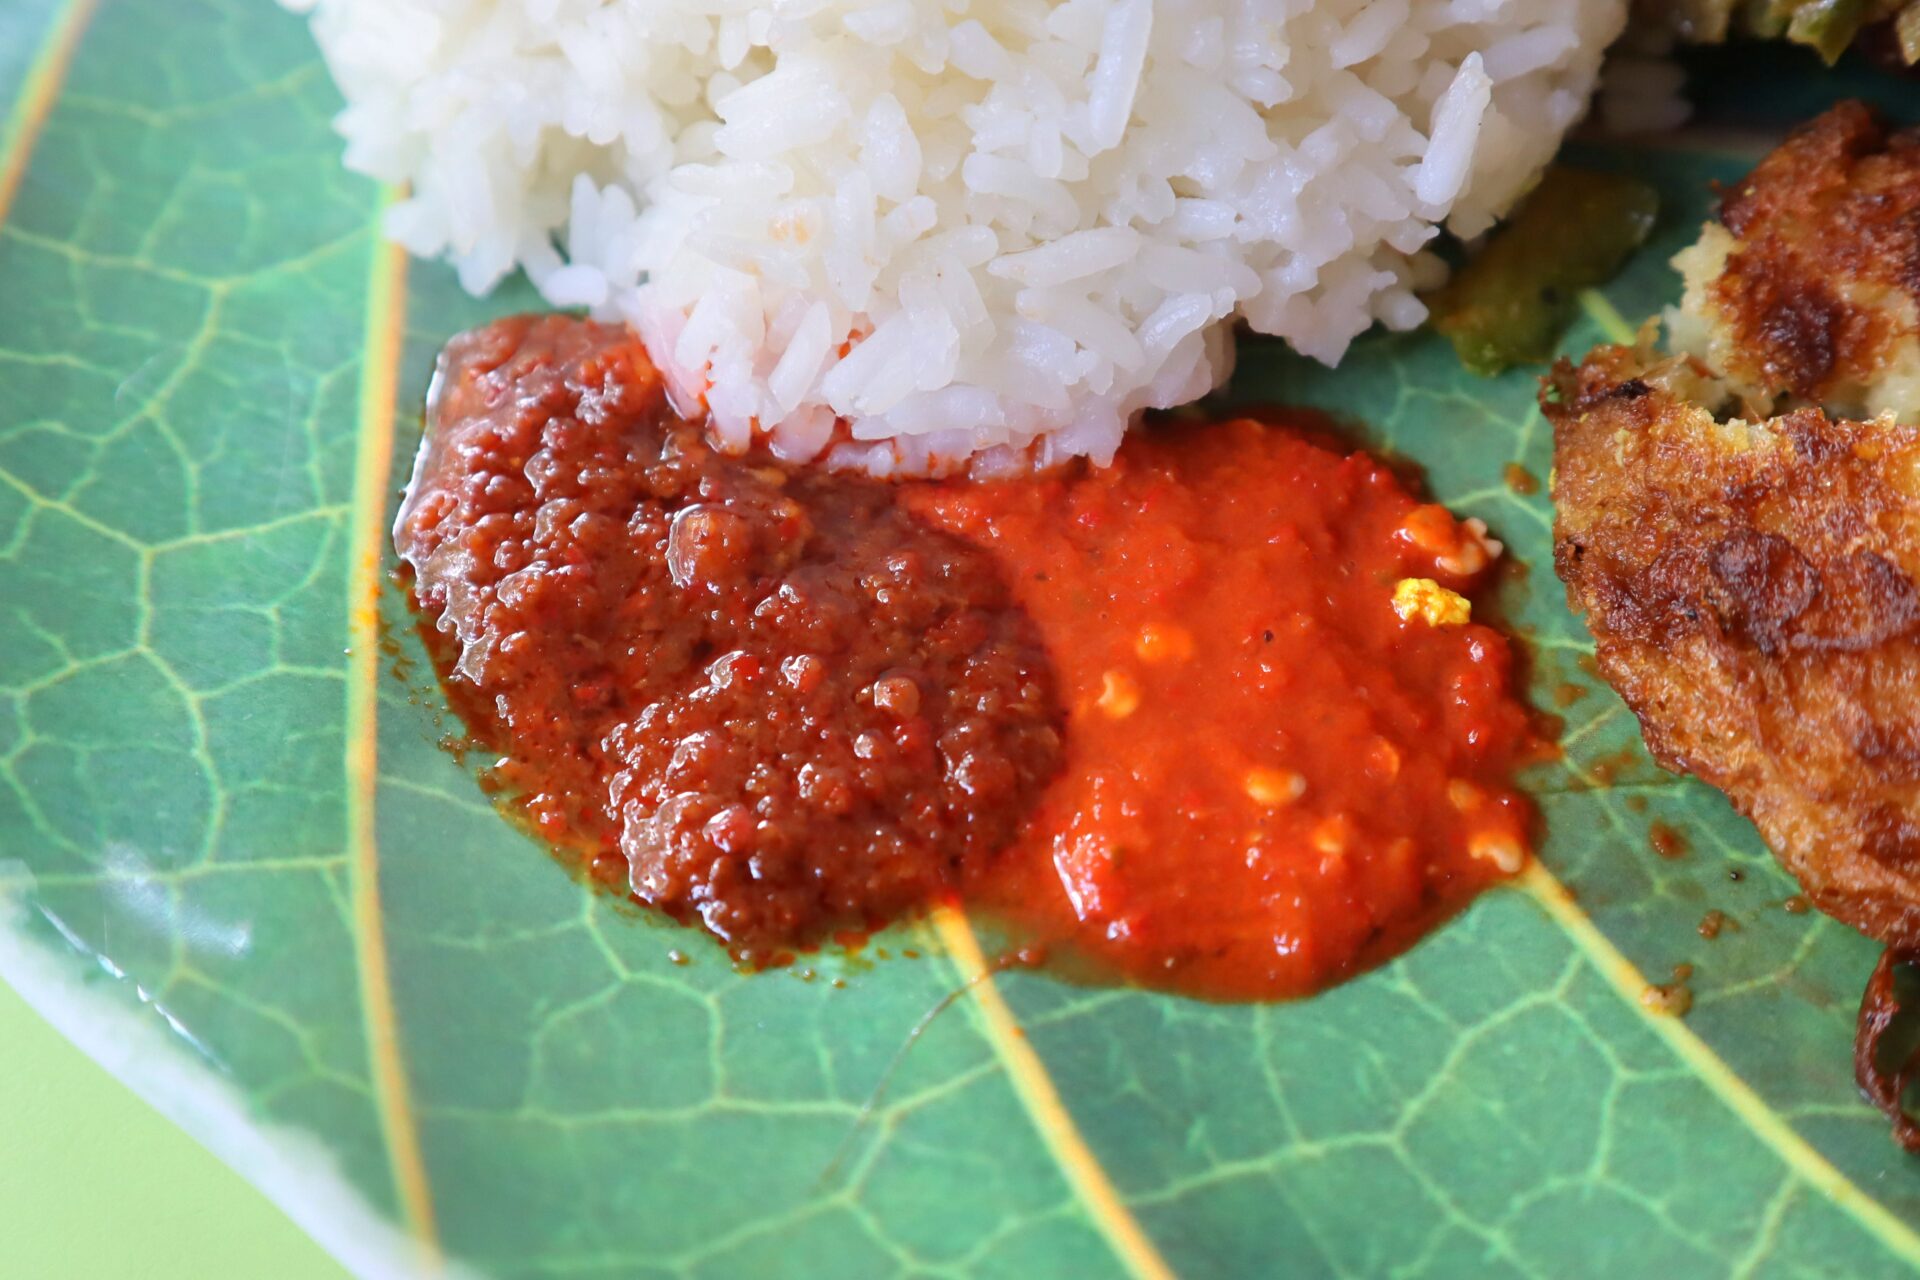 anthony indonesian cuisine - chilli